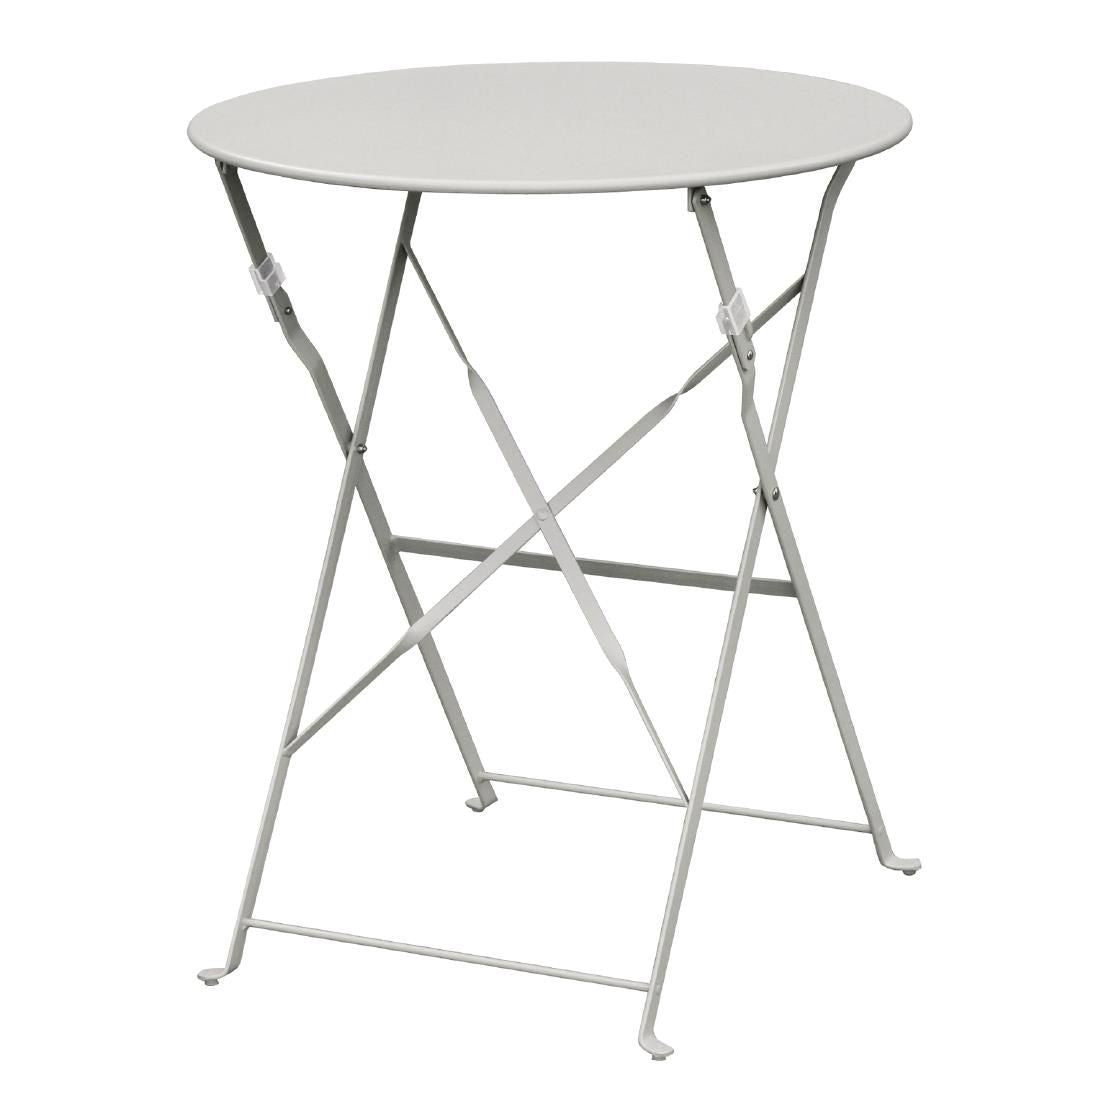 Bolero Grey Pavement Style Steel Table 595mm - GH556 Tables Bolero   